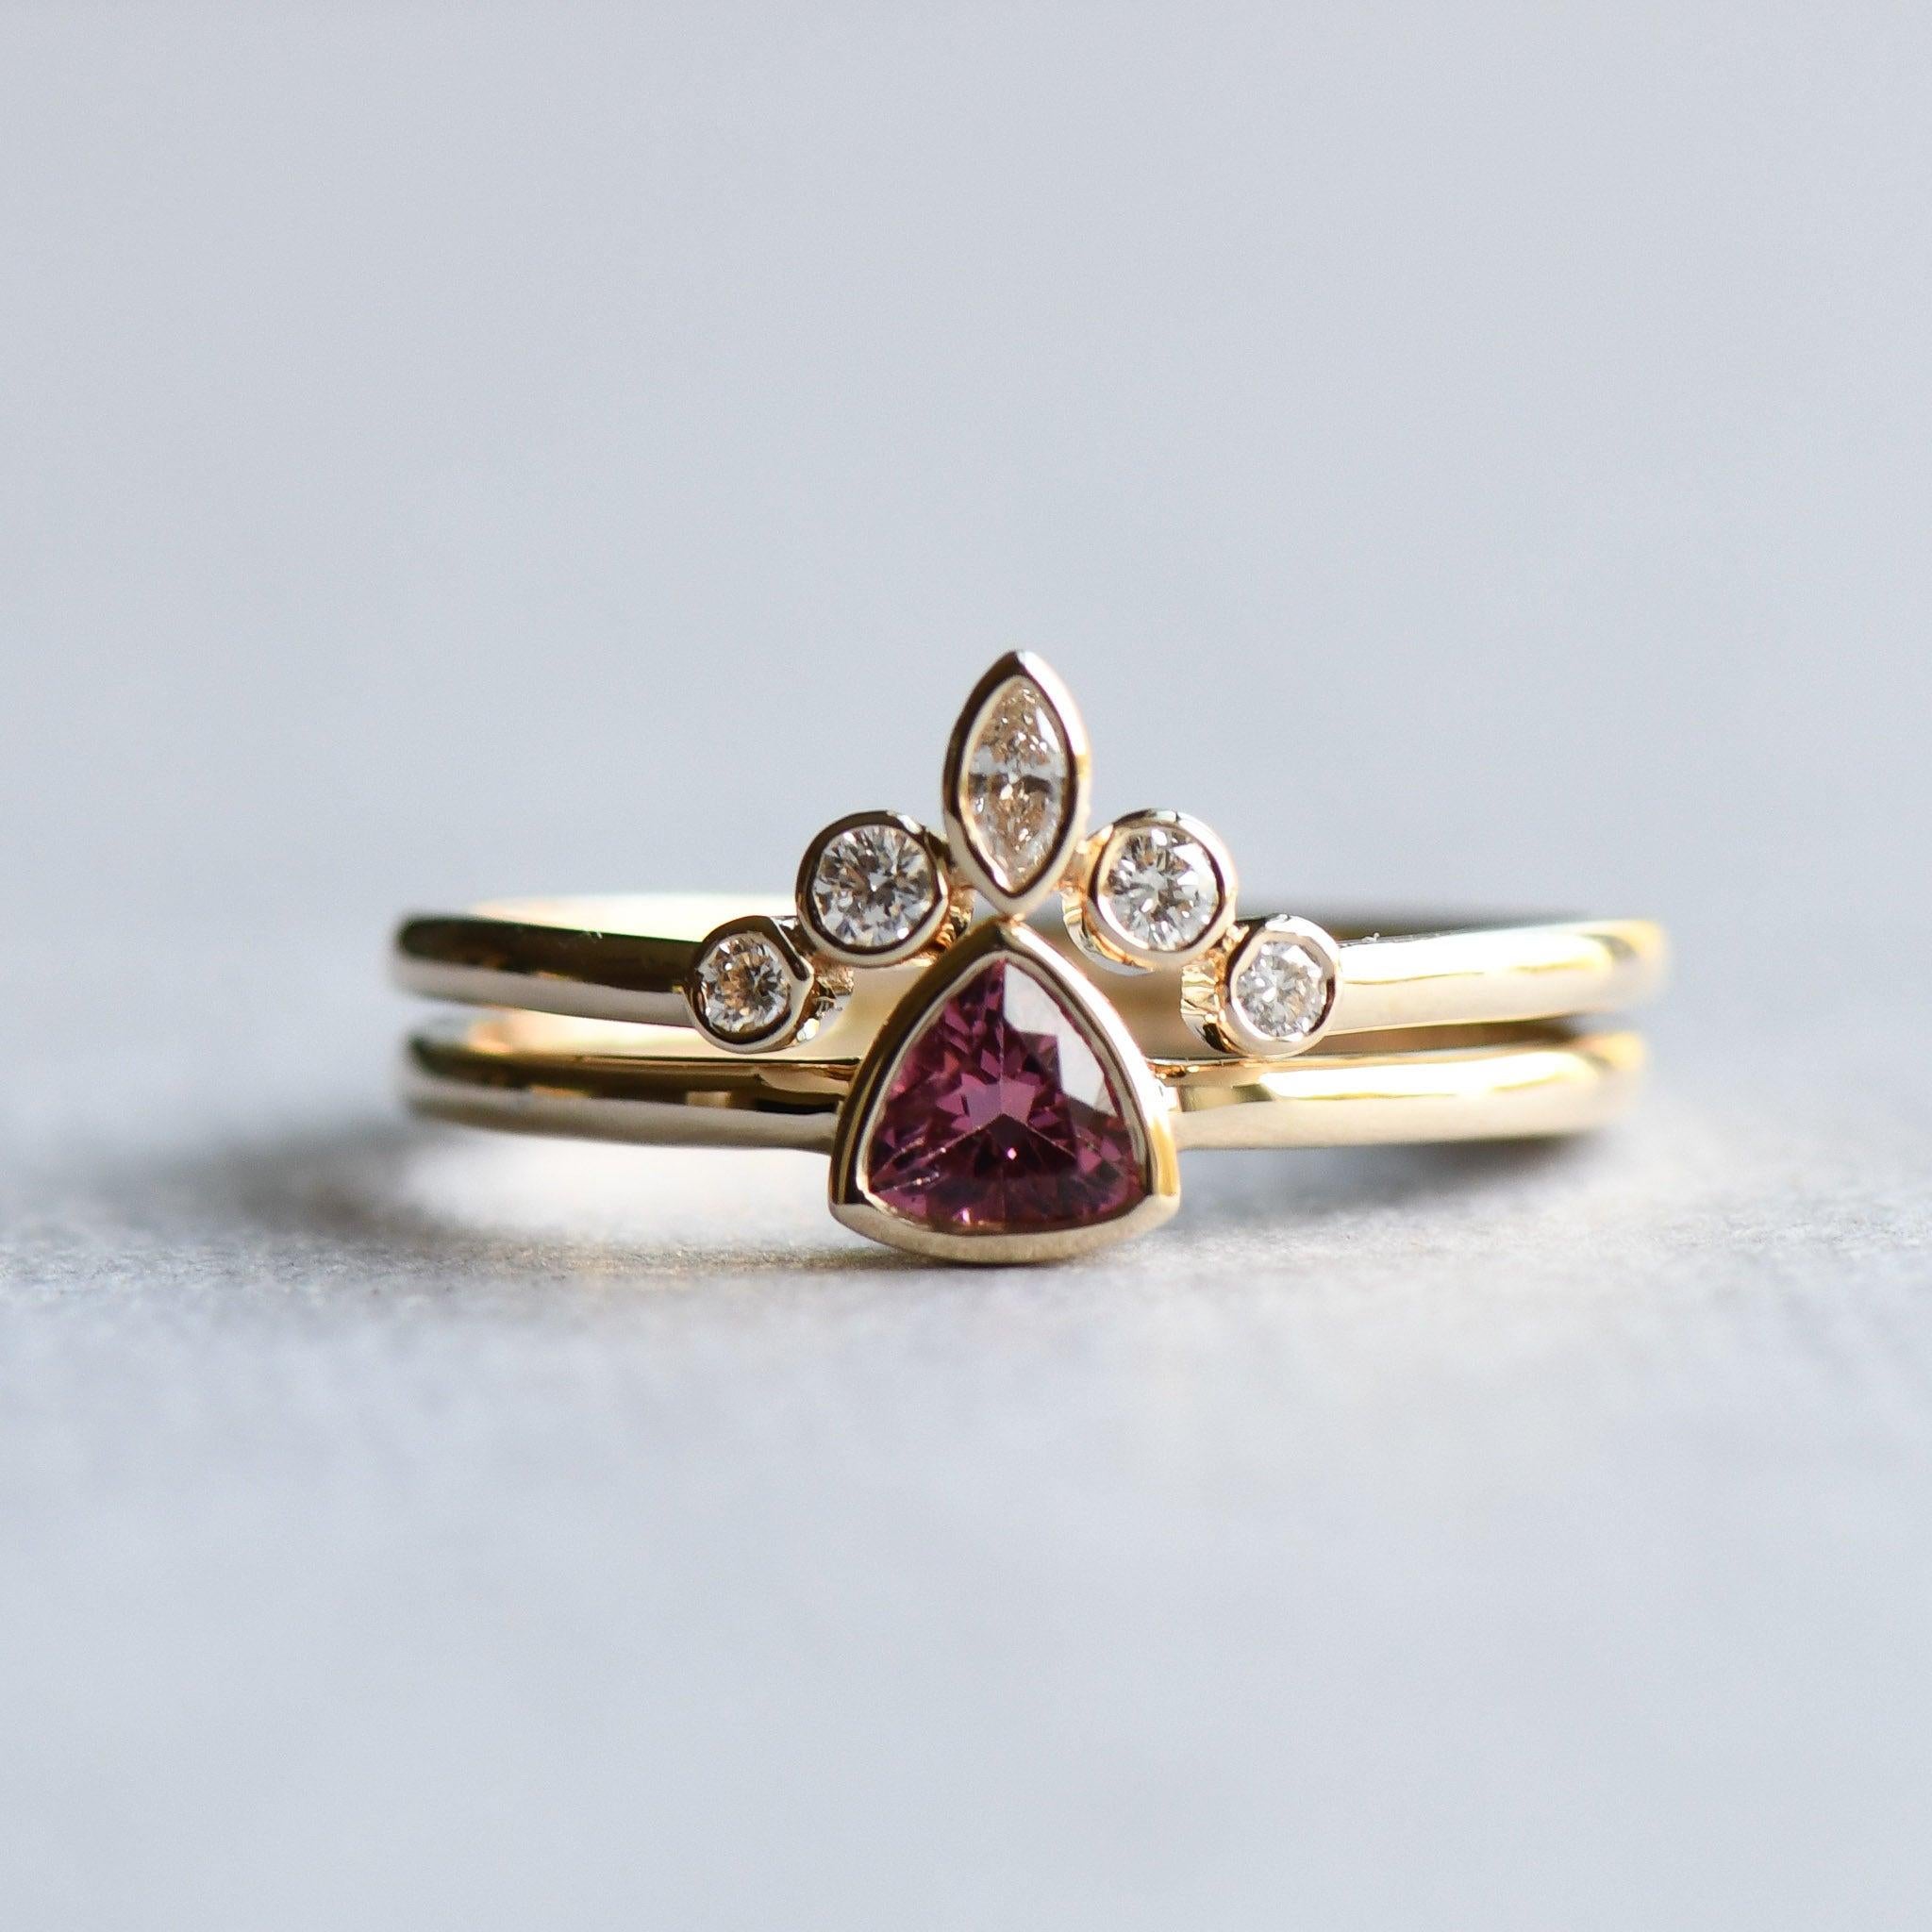 For Sale:  Pink Tourmaline Trillion Ring with Diamond Ring Guard, 14 Karat Rose Gold Ring 3